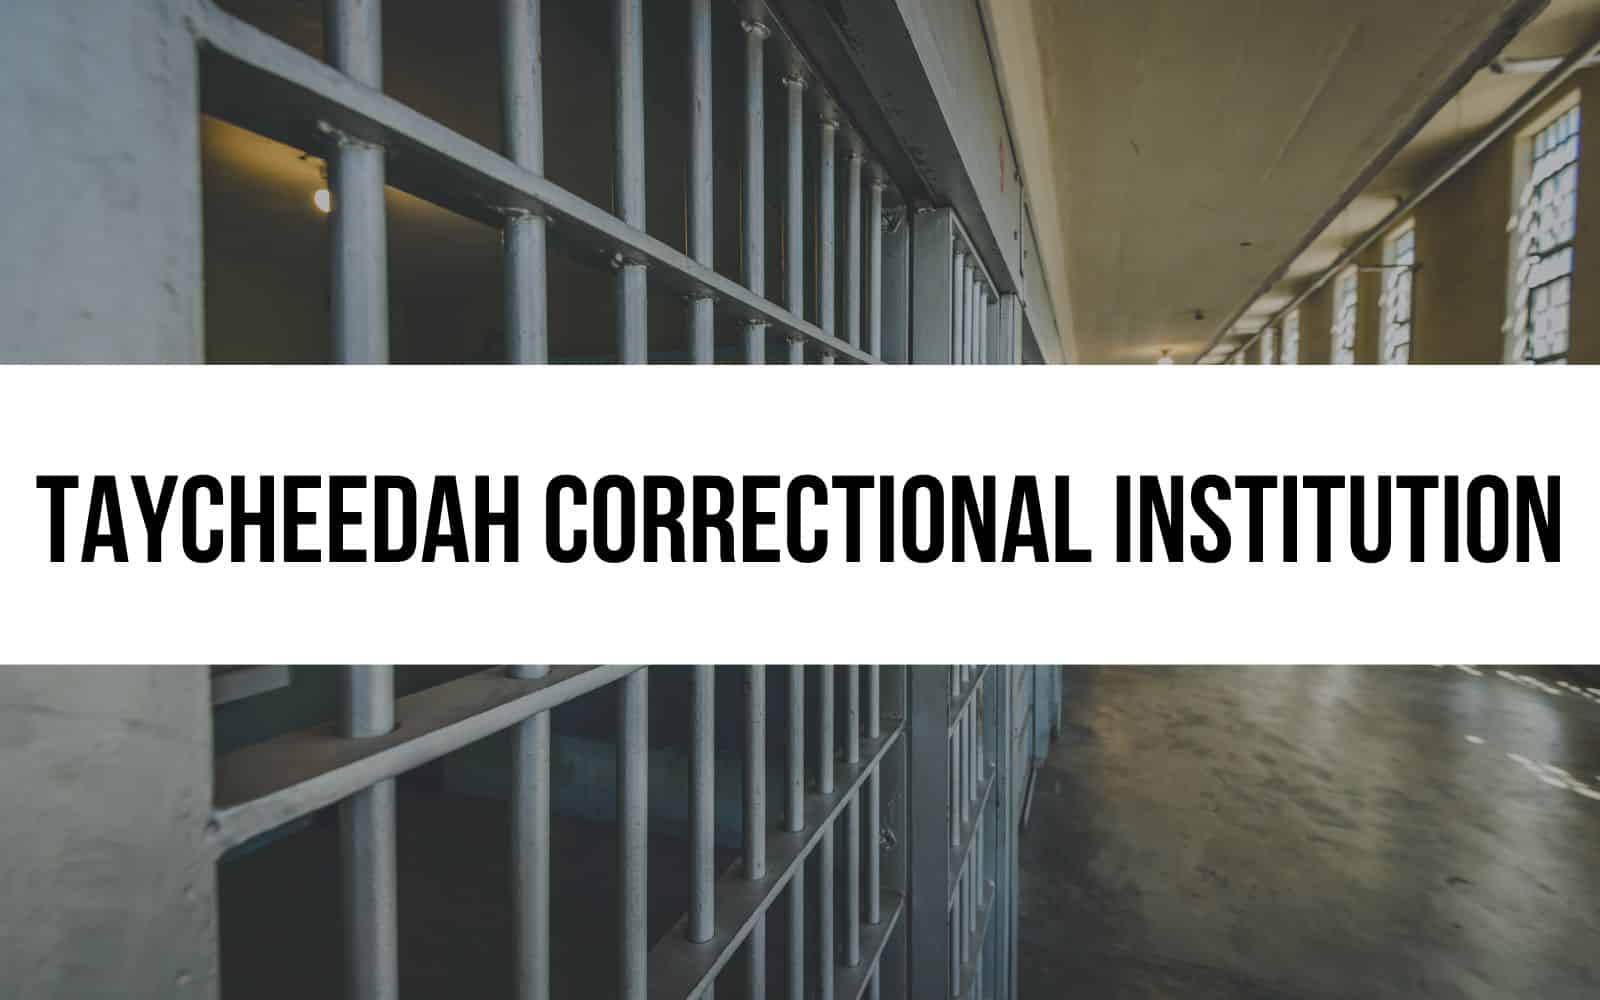 Taycheedah Correctional Institution